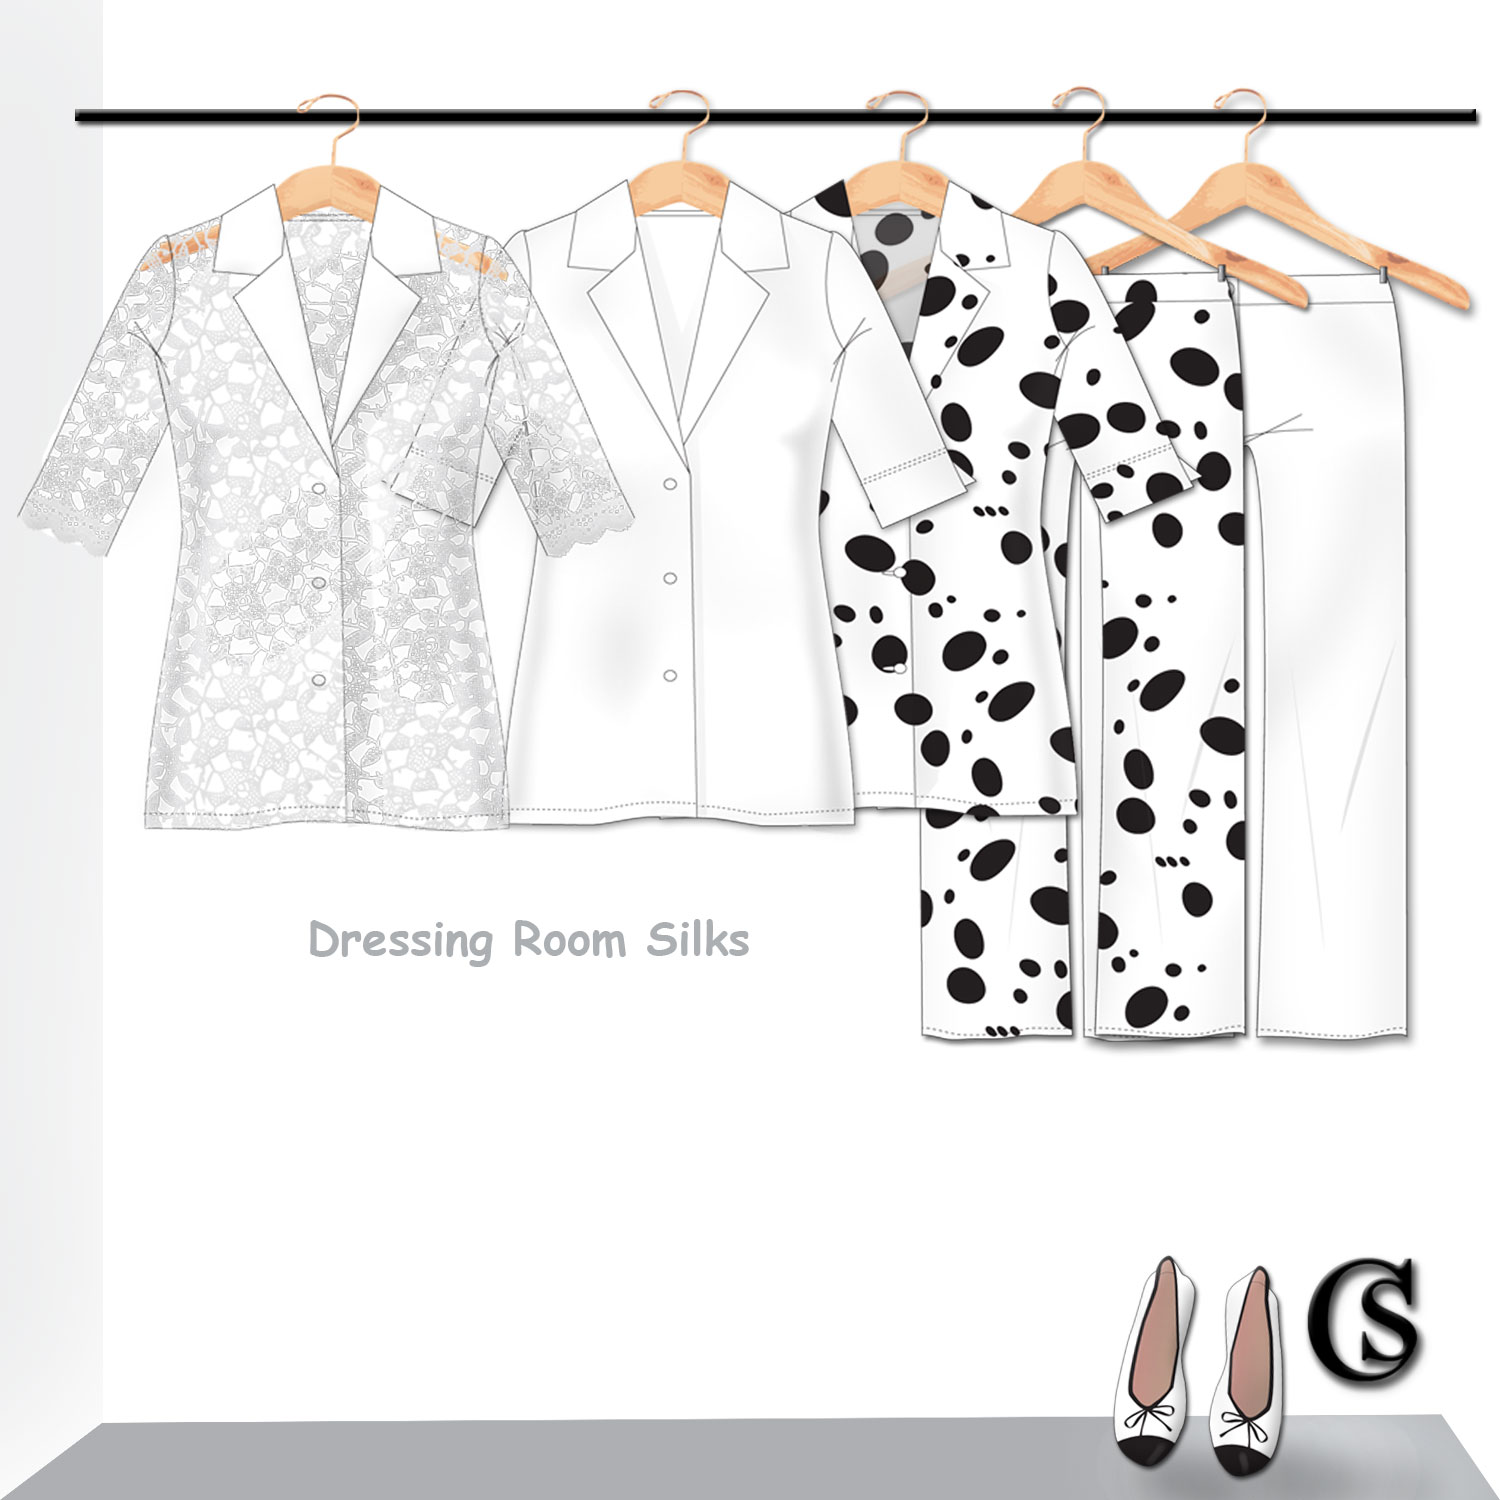 In the dressing room find trends flor sleepwear2019. 